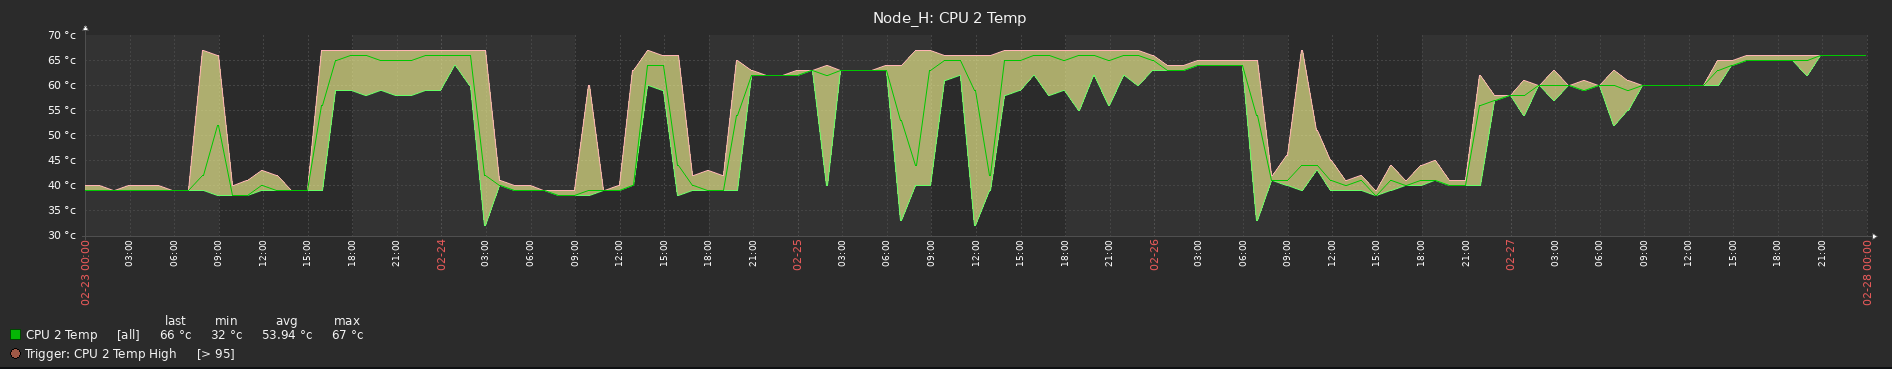 temperature_graph